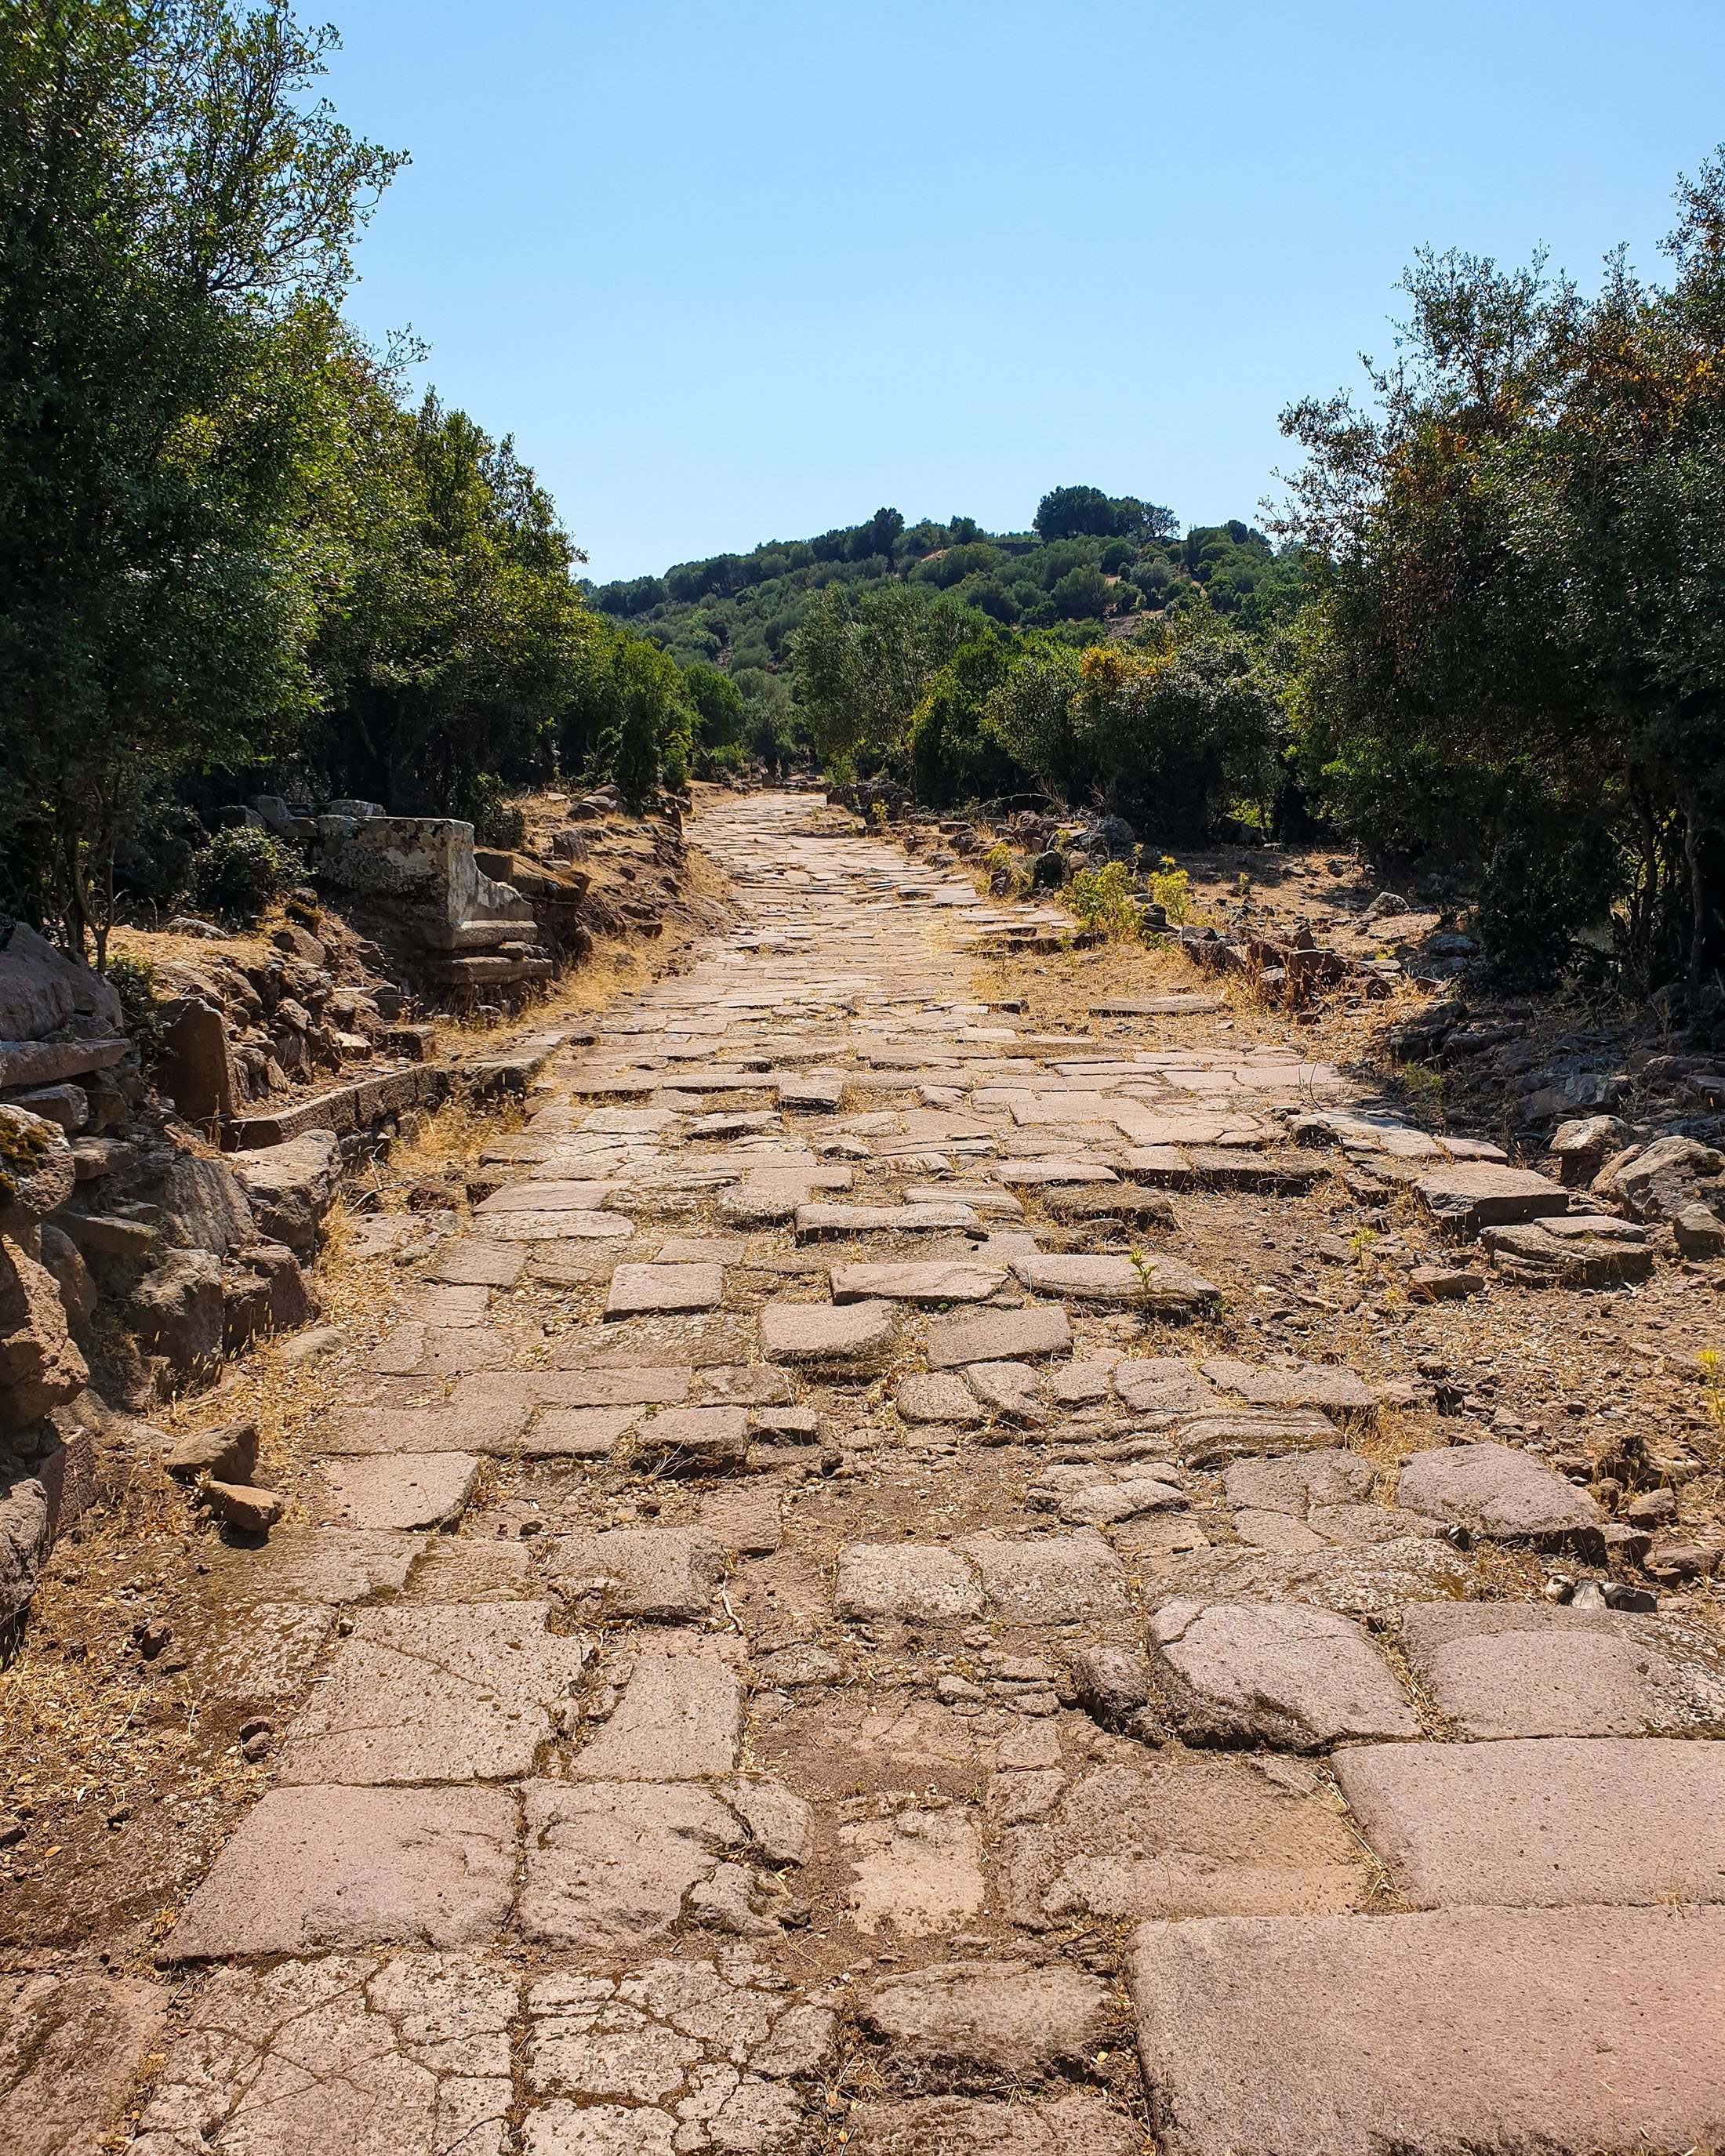 The cobblestone path at Aigai. (Photo by Argun Konuk)